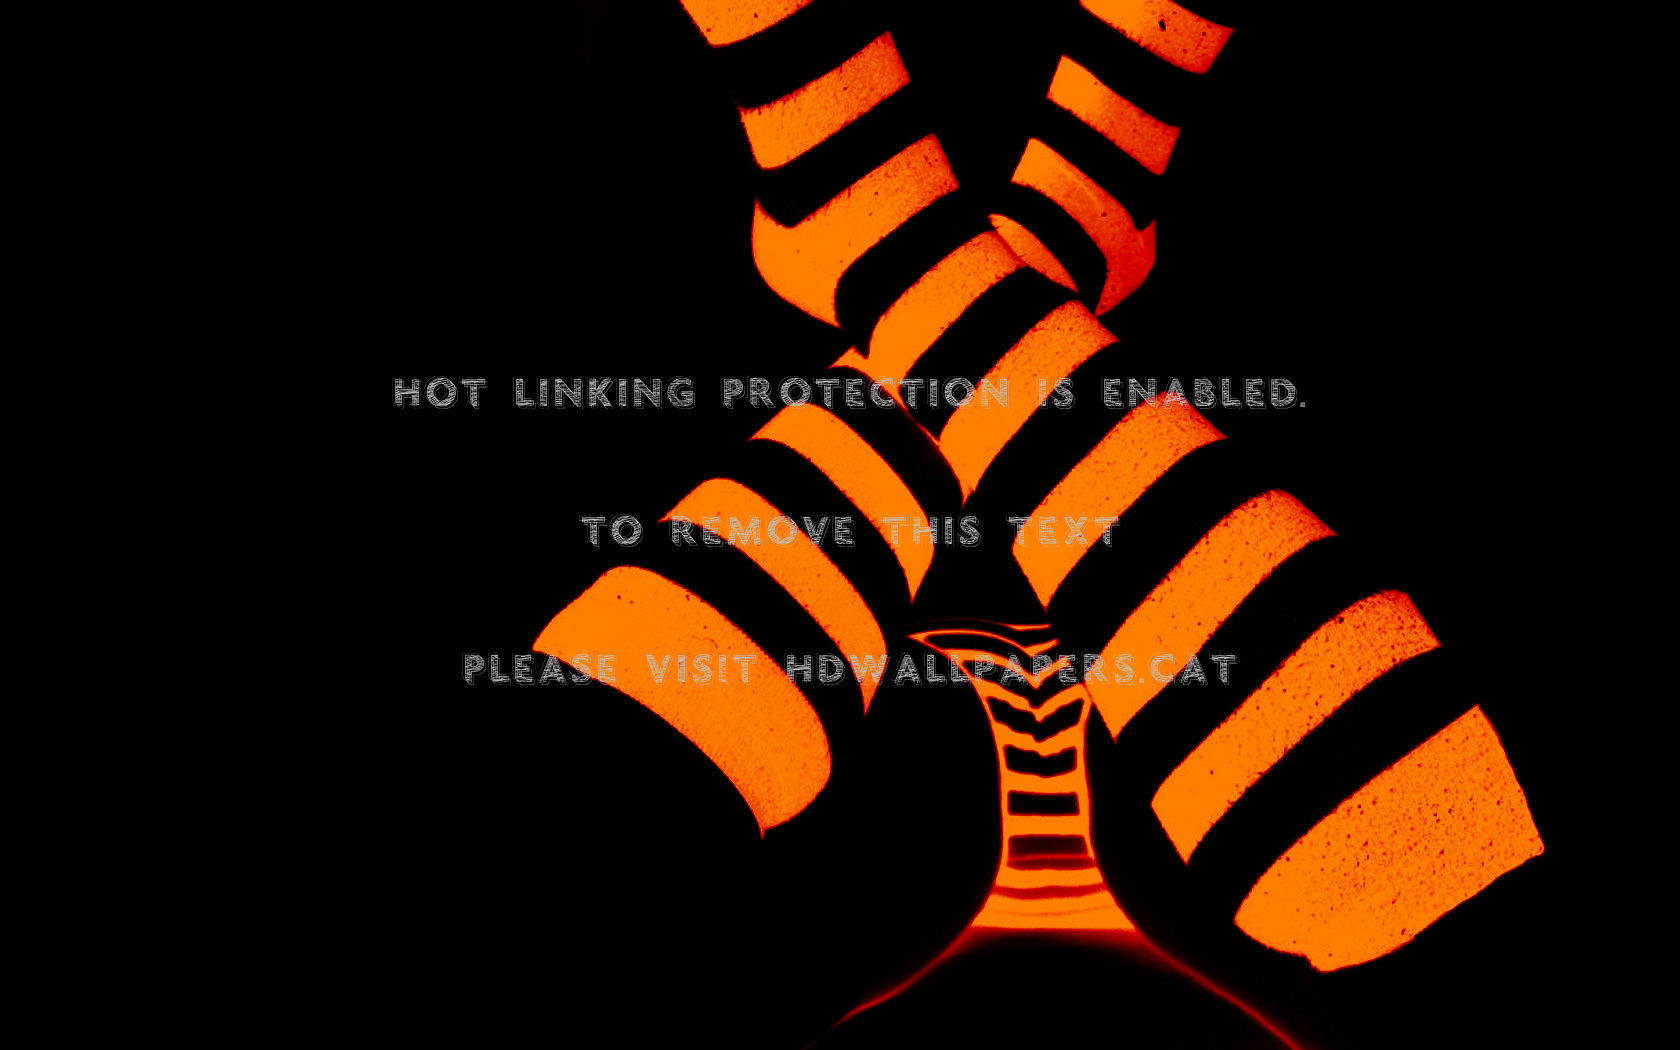 Tiger Stripes Striped Socks Abstract Orange - Glowing Wallpaper Iphone 5s - HD Wallpaper 